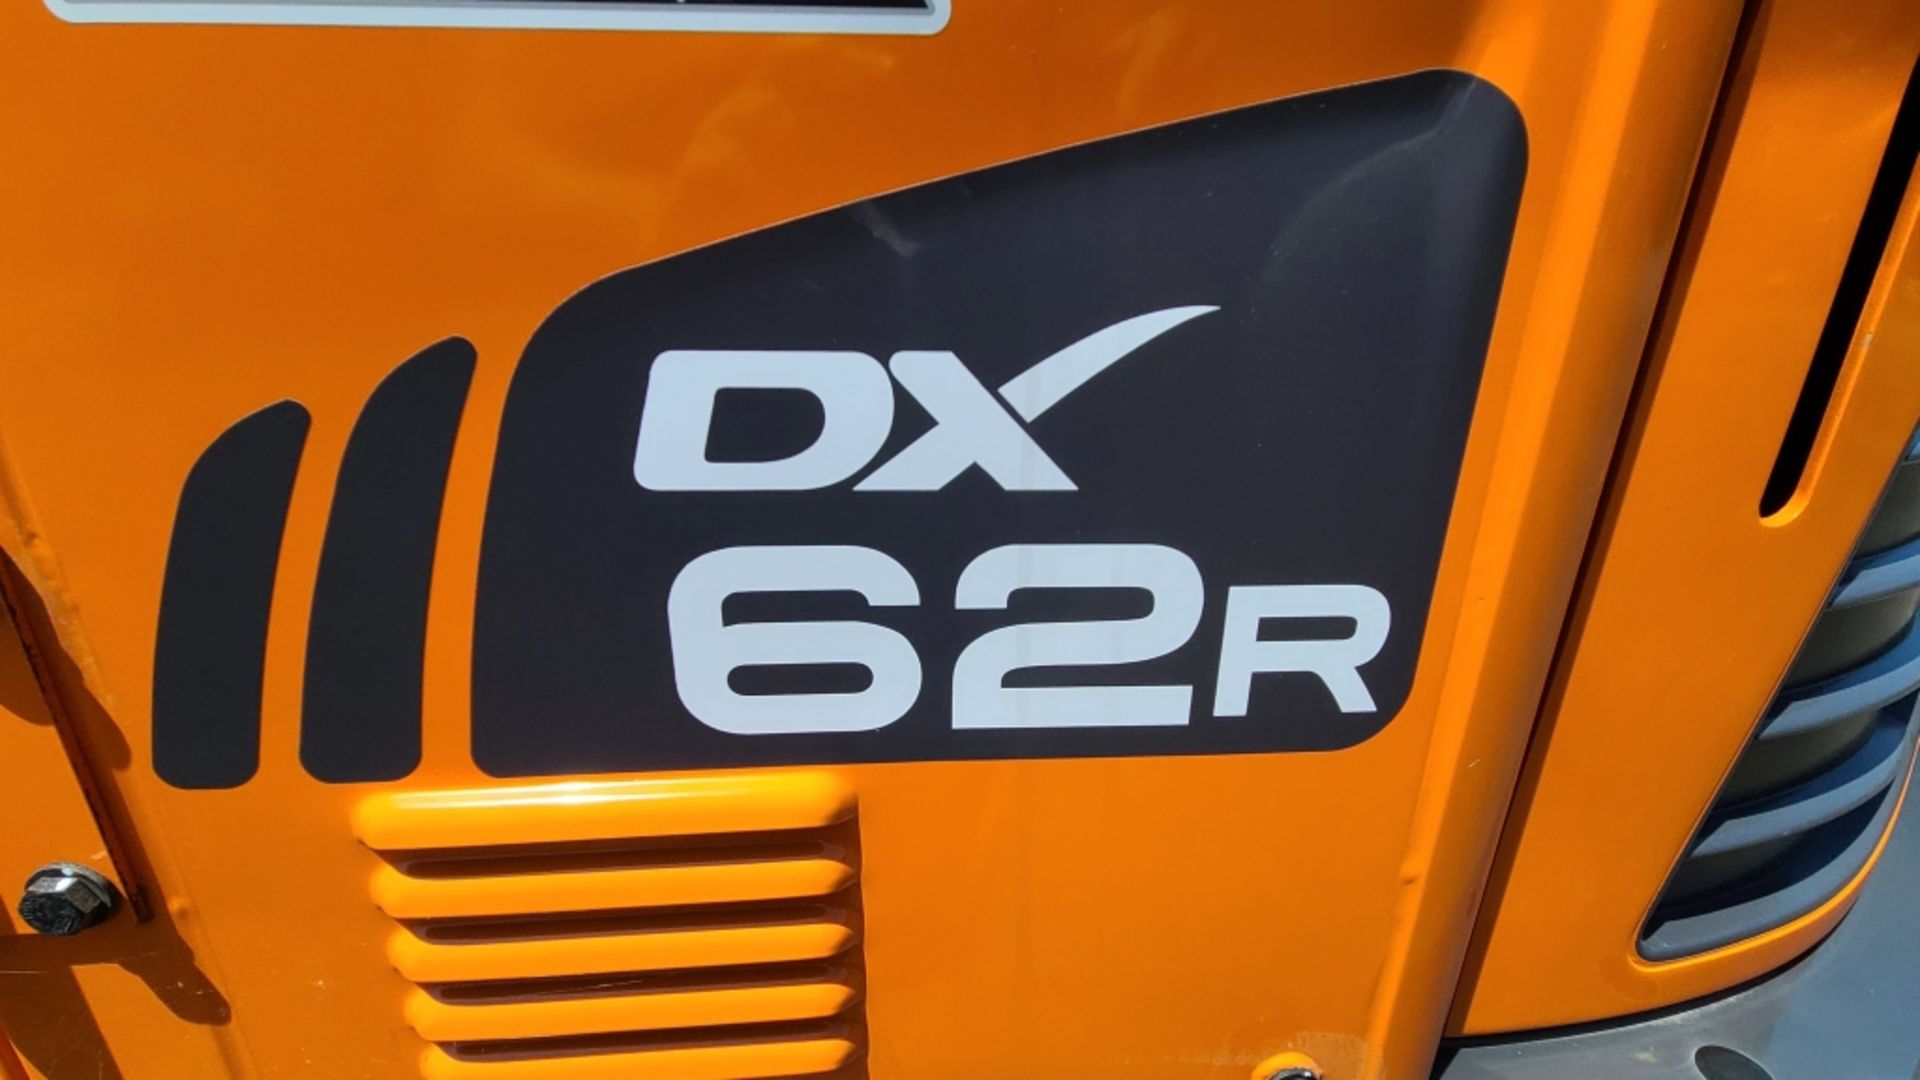 2020 Doosan DX62R-3 - Image 5 of 11